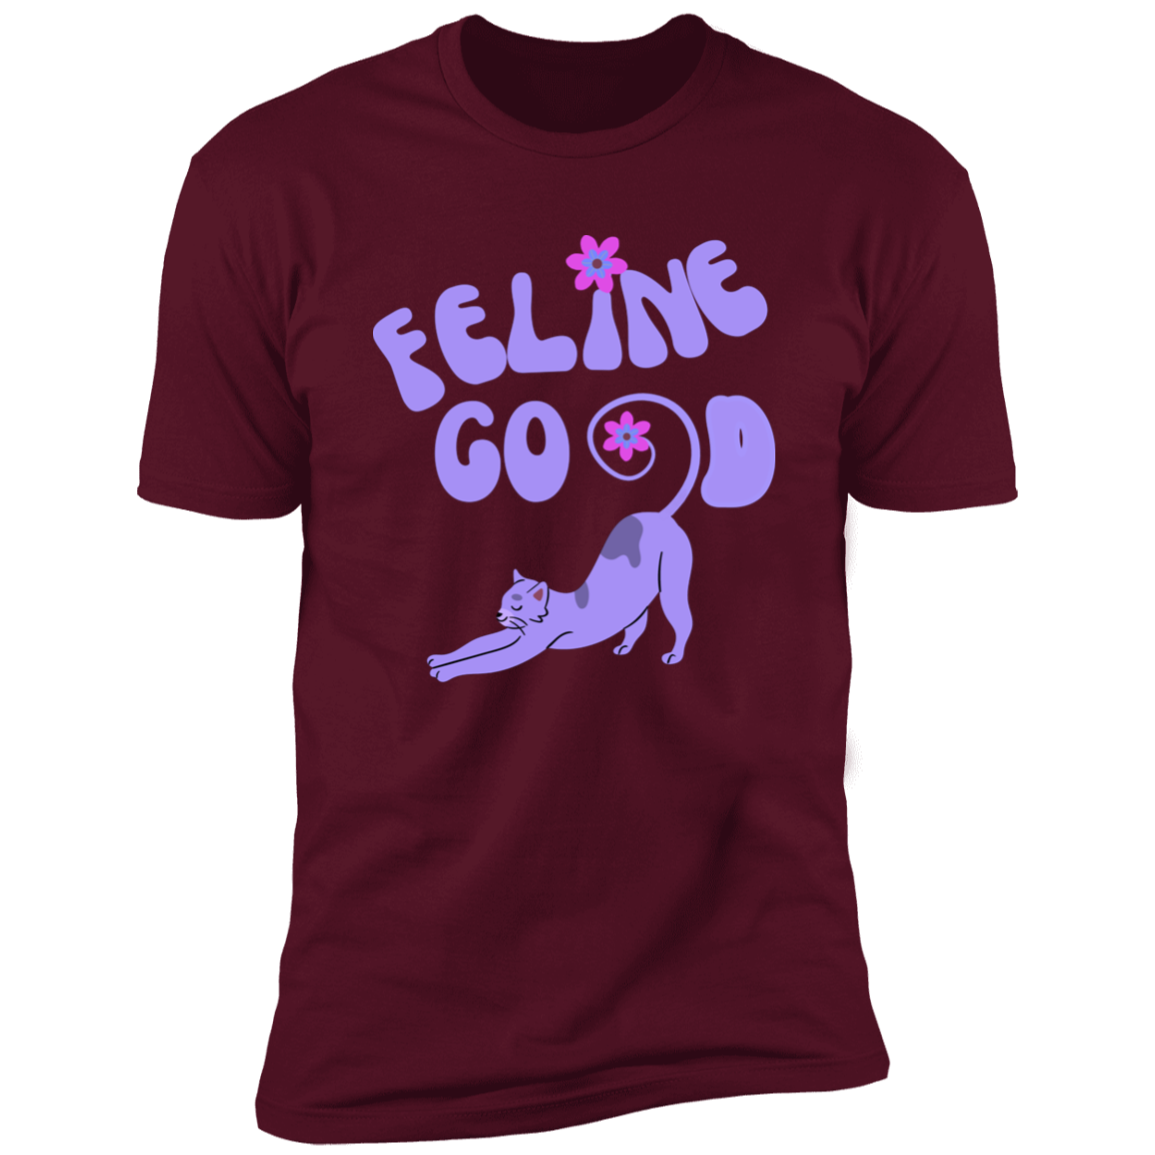 Feline Good Cat T-Shirt, Cat Shirt for humans, in maroon